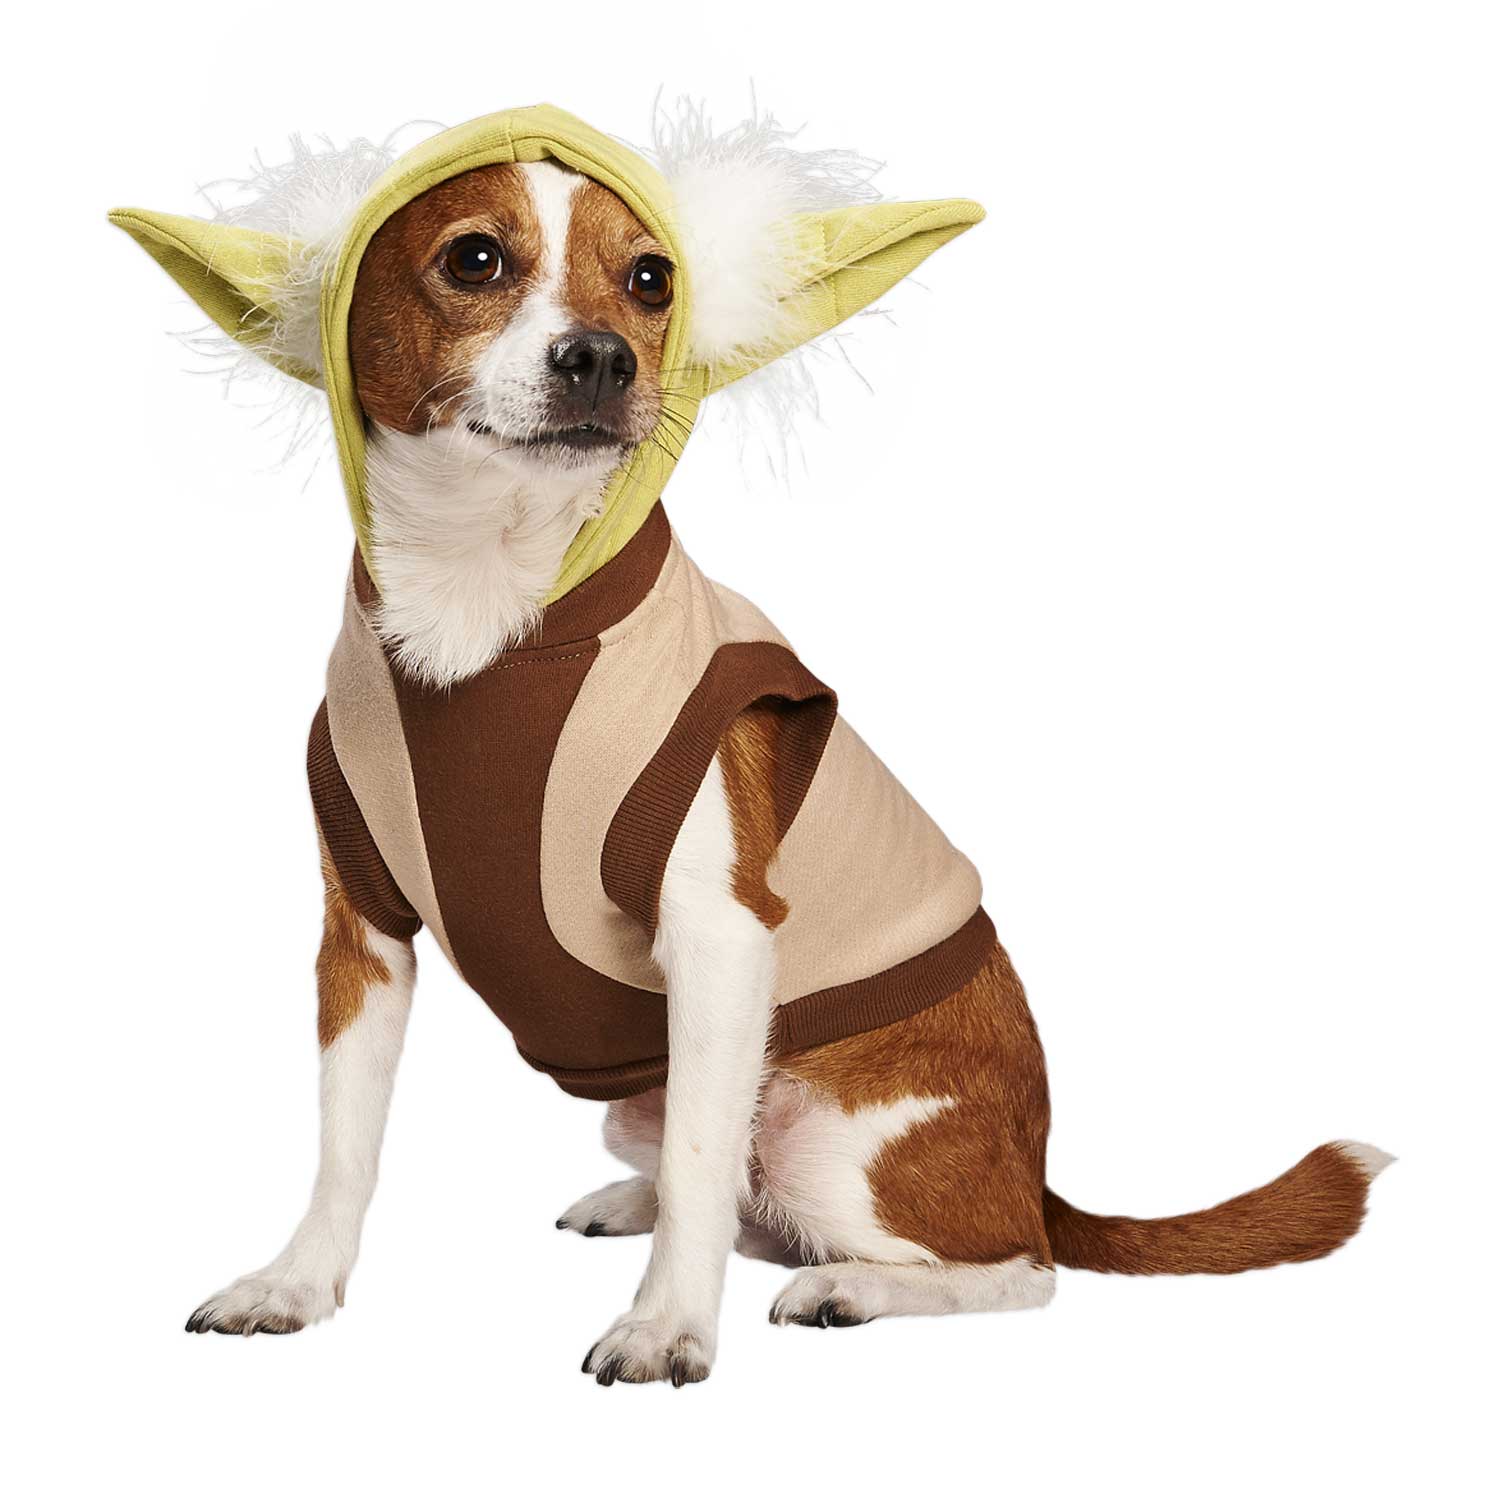 Star Wars Yoda Dog Hoodie - $15.99